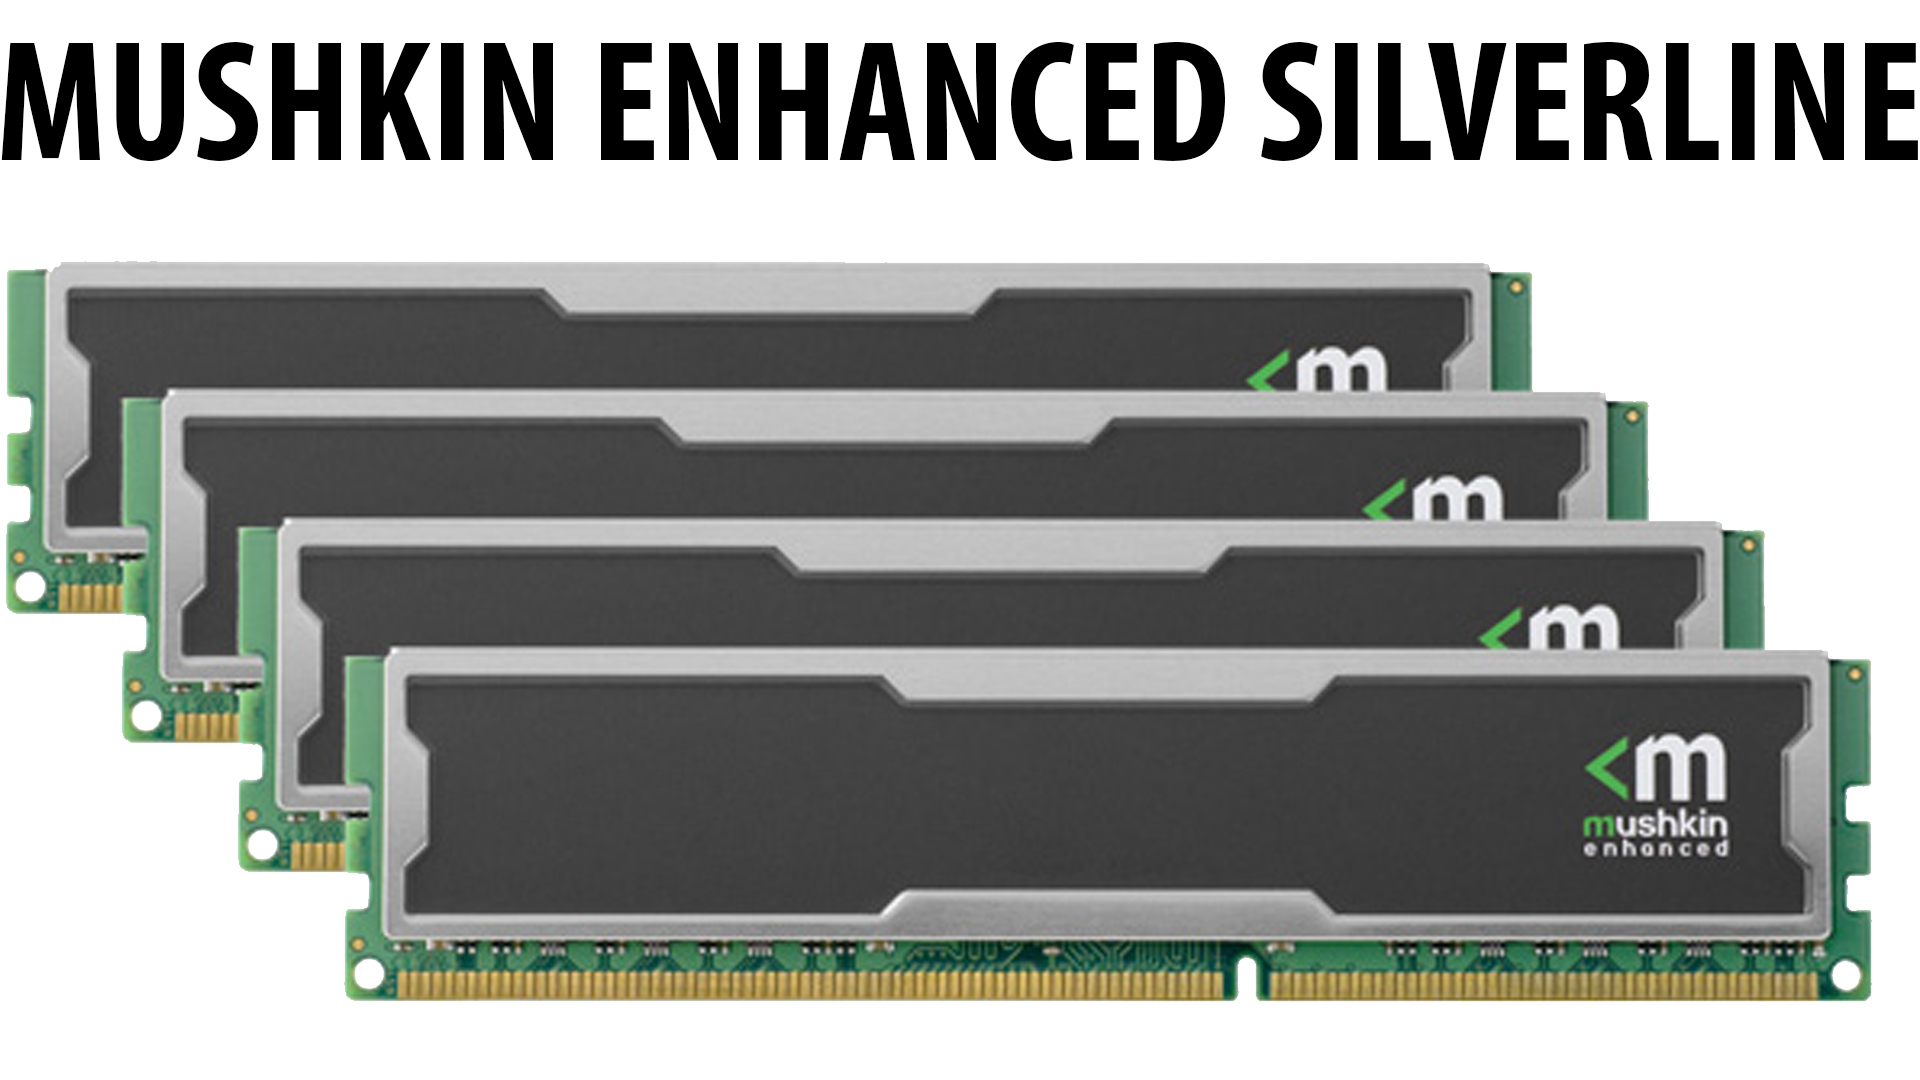 Mushkin Enhanced Silverline 16GB DDR3 RAM Review